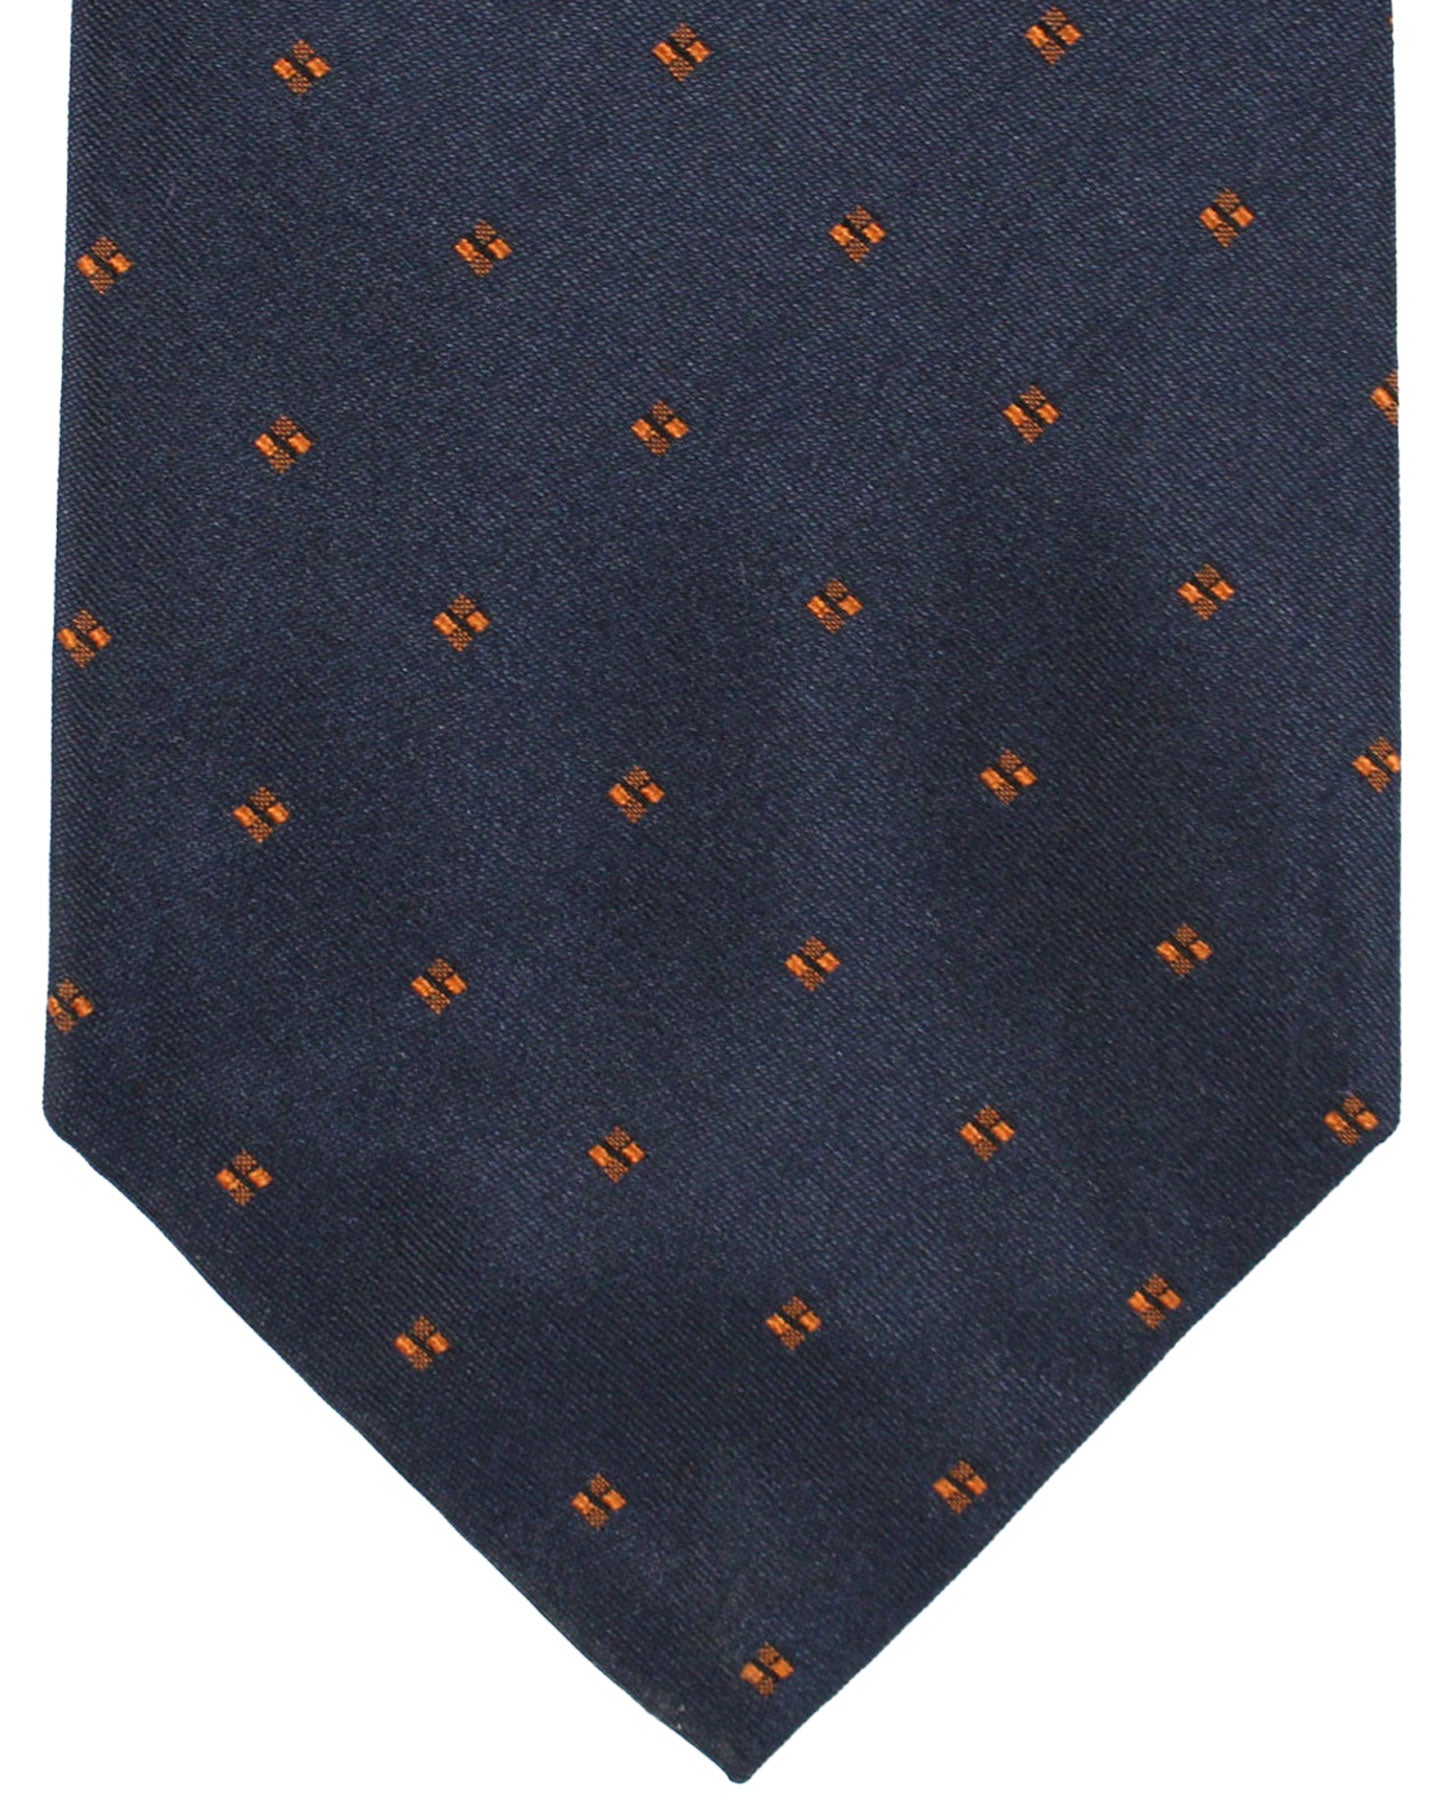 Massimo Valeri 11 Fold Tie Dark Blue Brown Geometric - Elevenfold Necktie